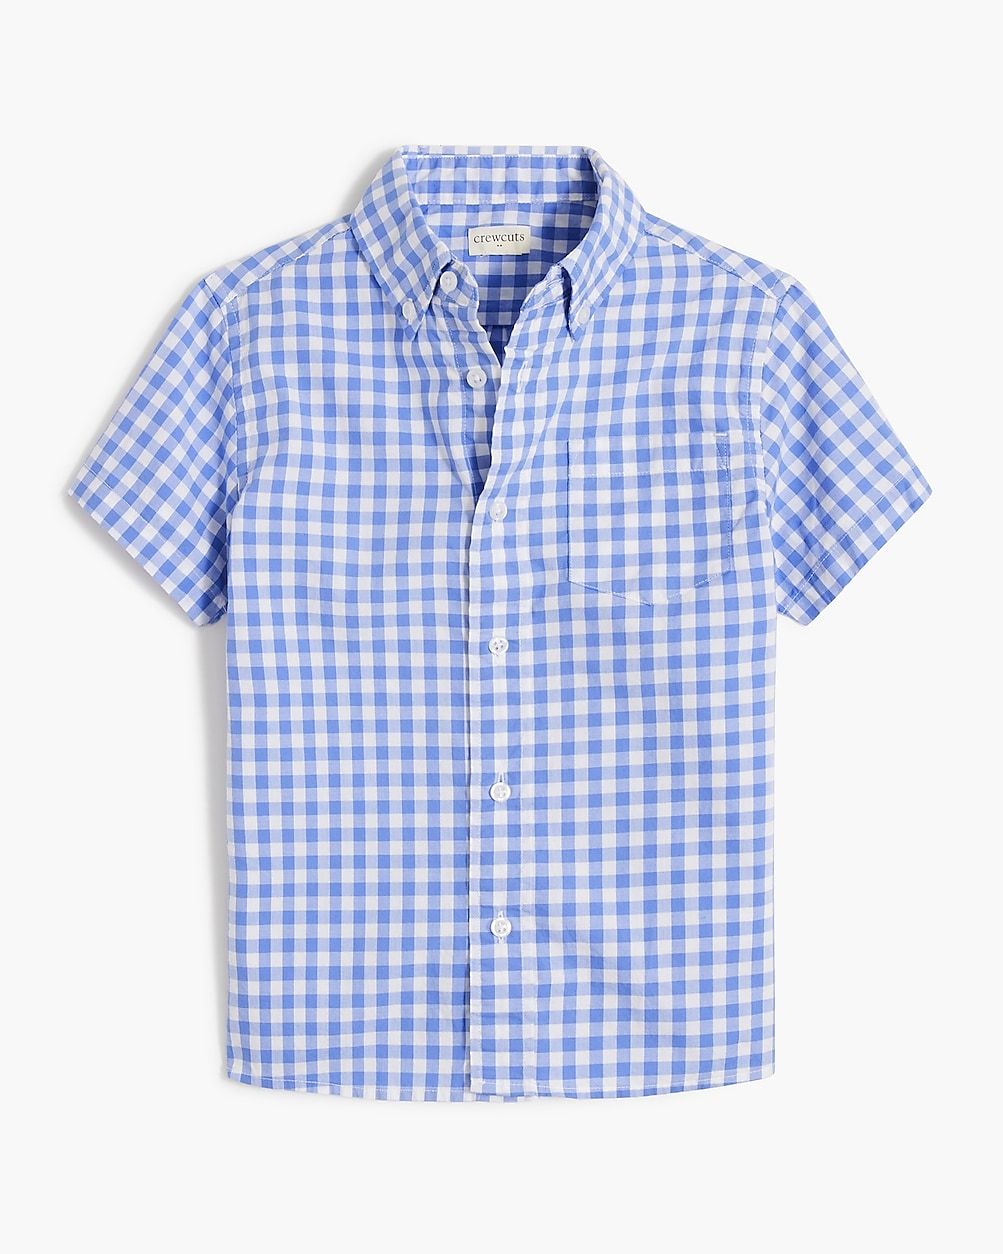 Boys' short-sleeve gingham shirt | J.Crew Factory